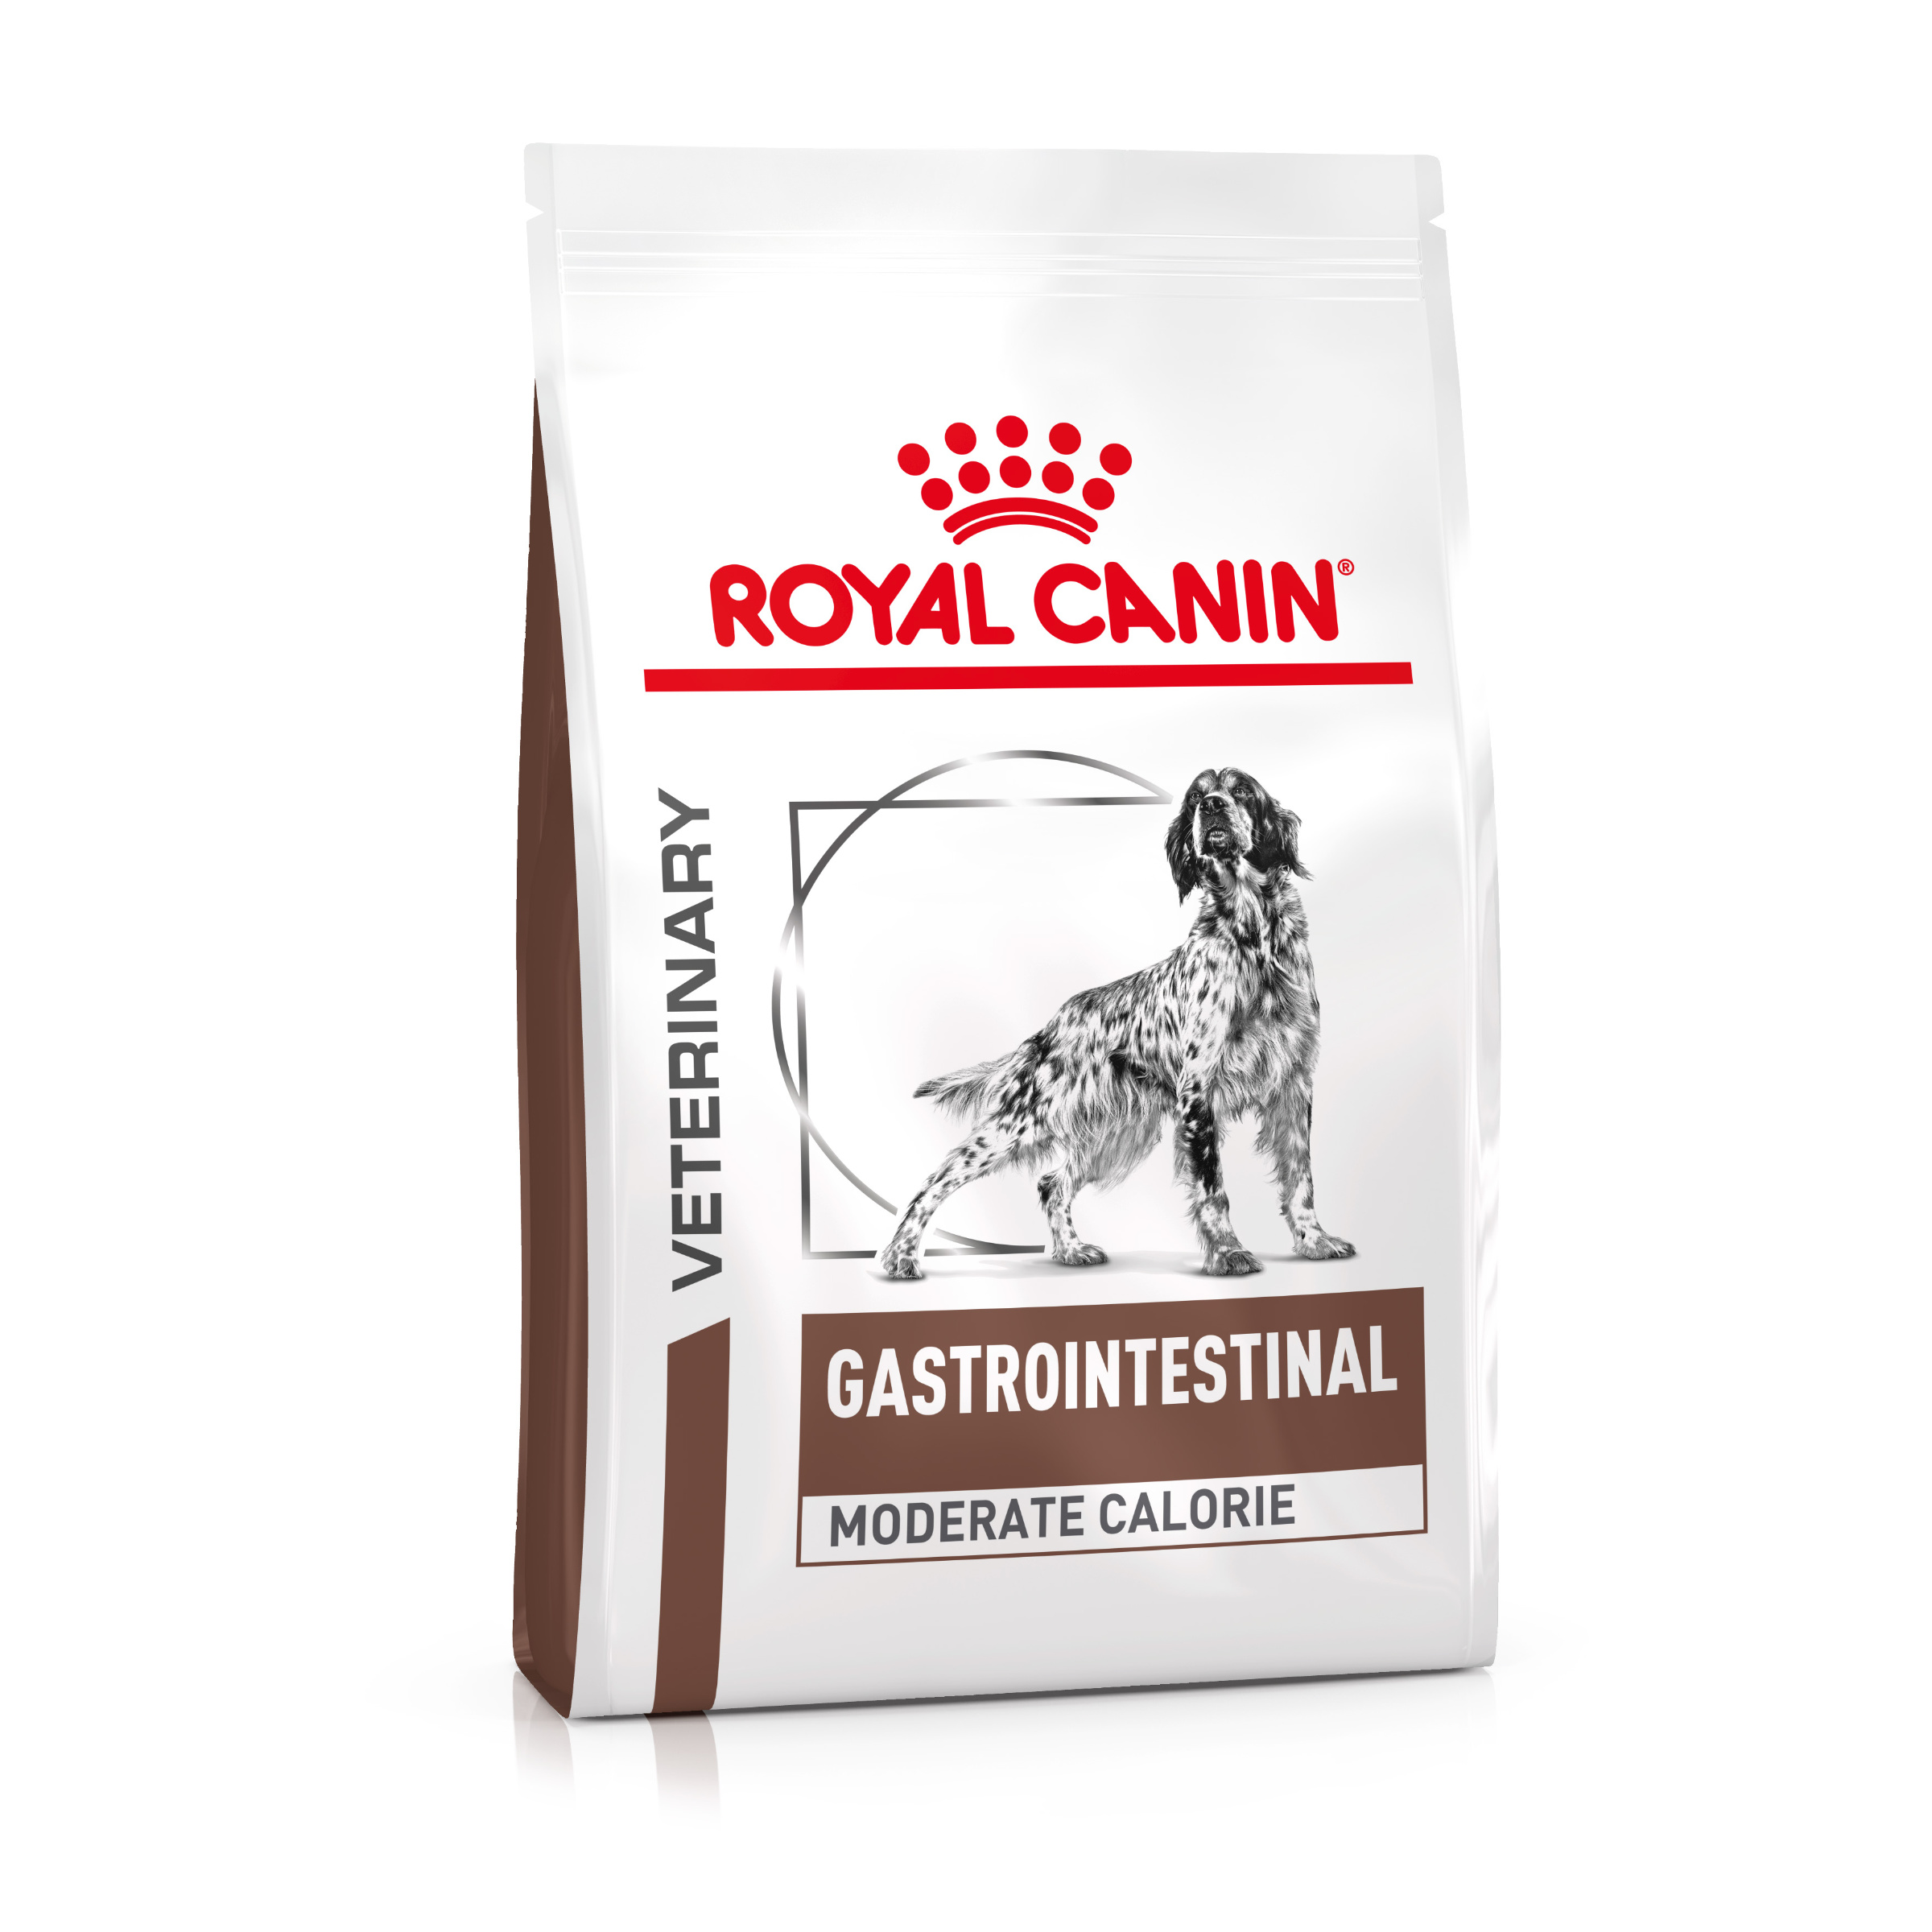 ROYAL CANIN Veterinary GASTROINTESTINAL MODERATE CALORIE Trockenfutter für Hunde 